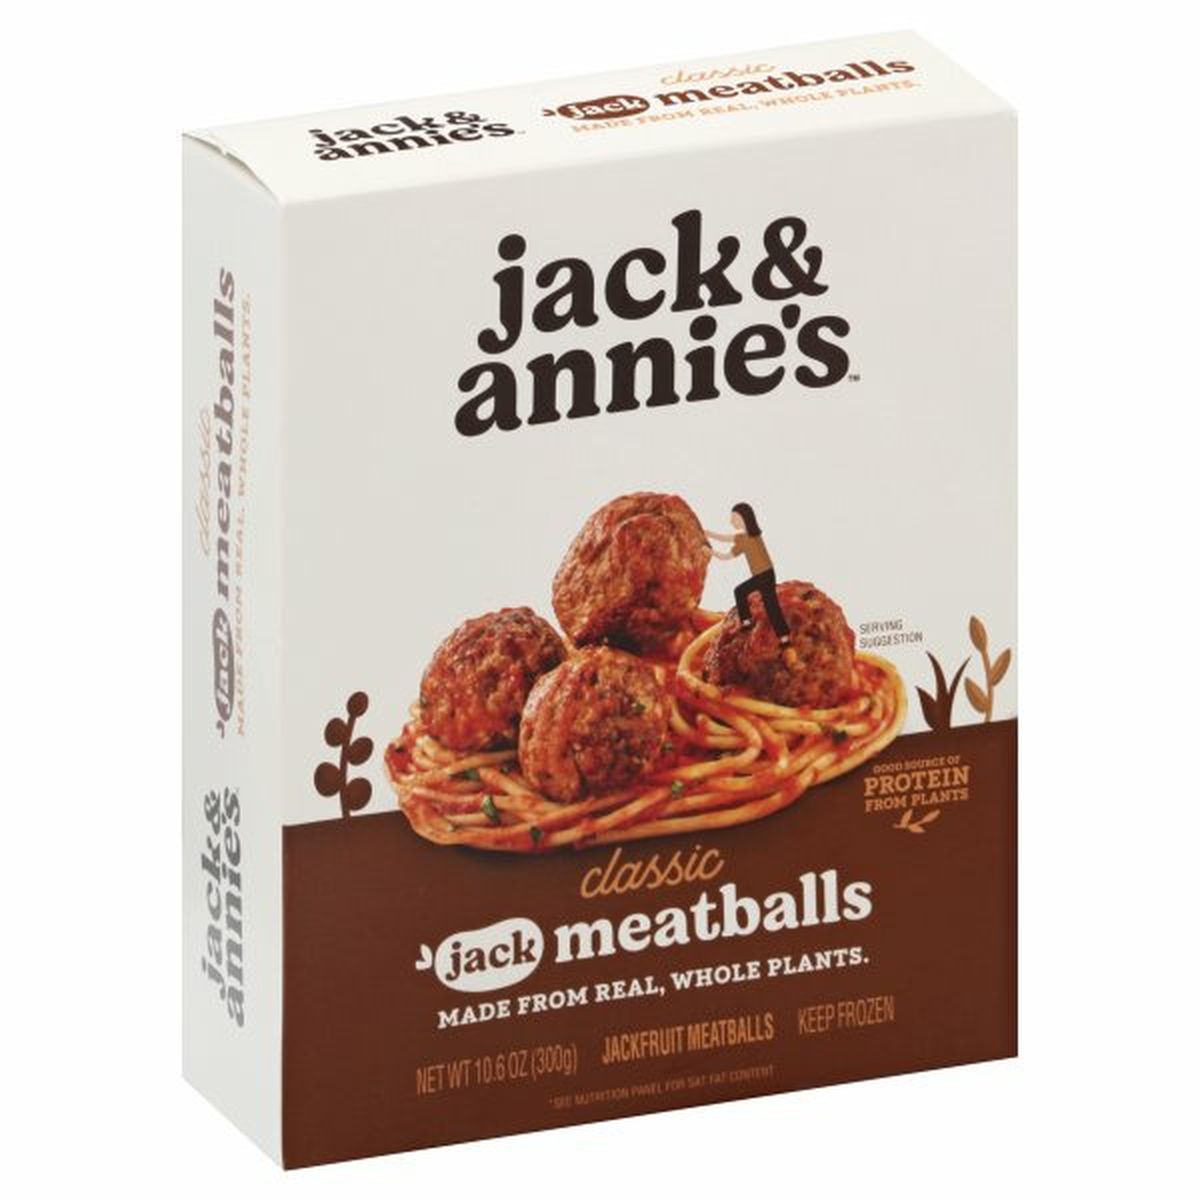 Calories in jack & annie's Meatballs, Classic